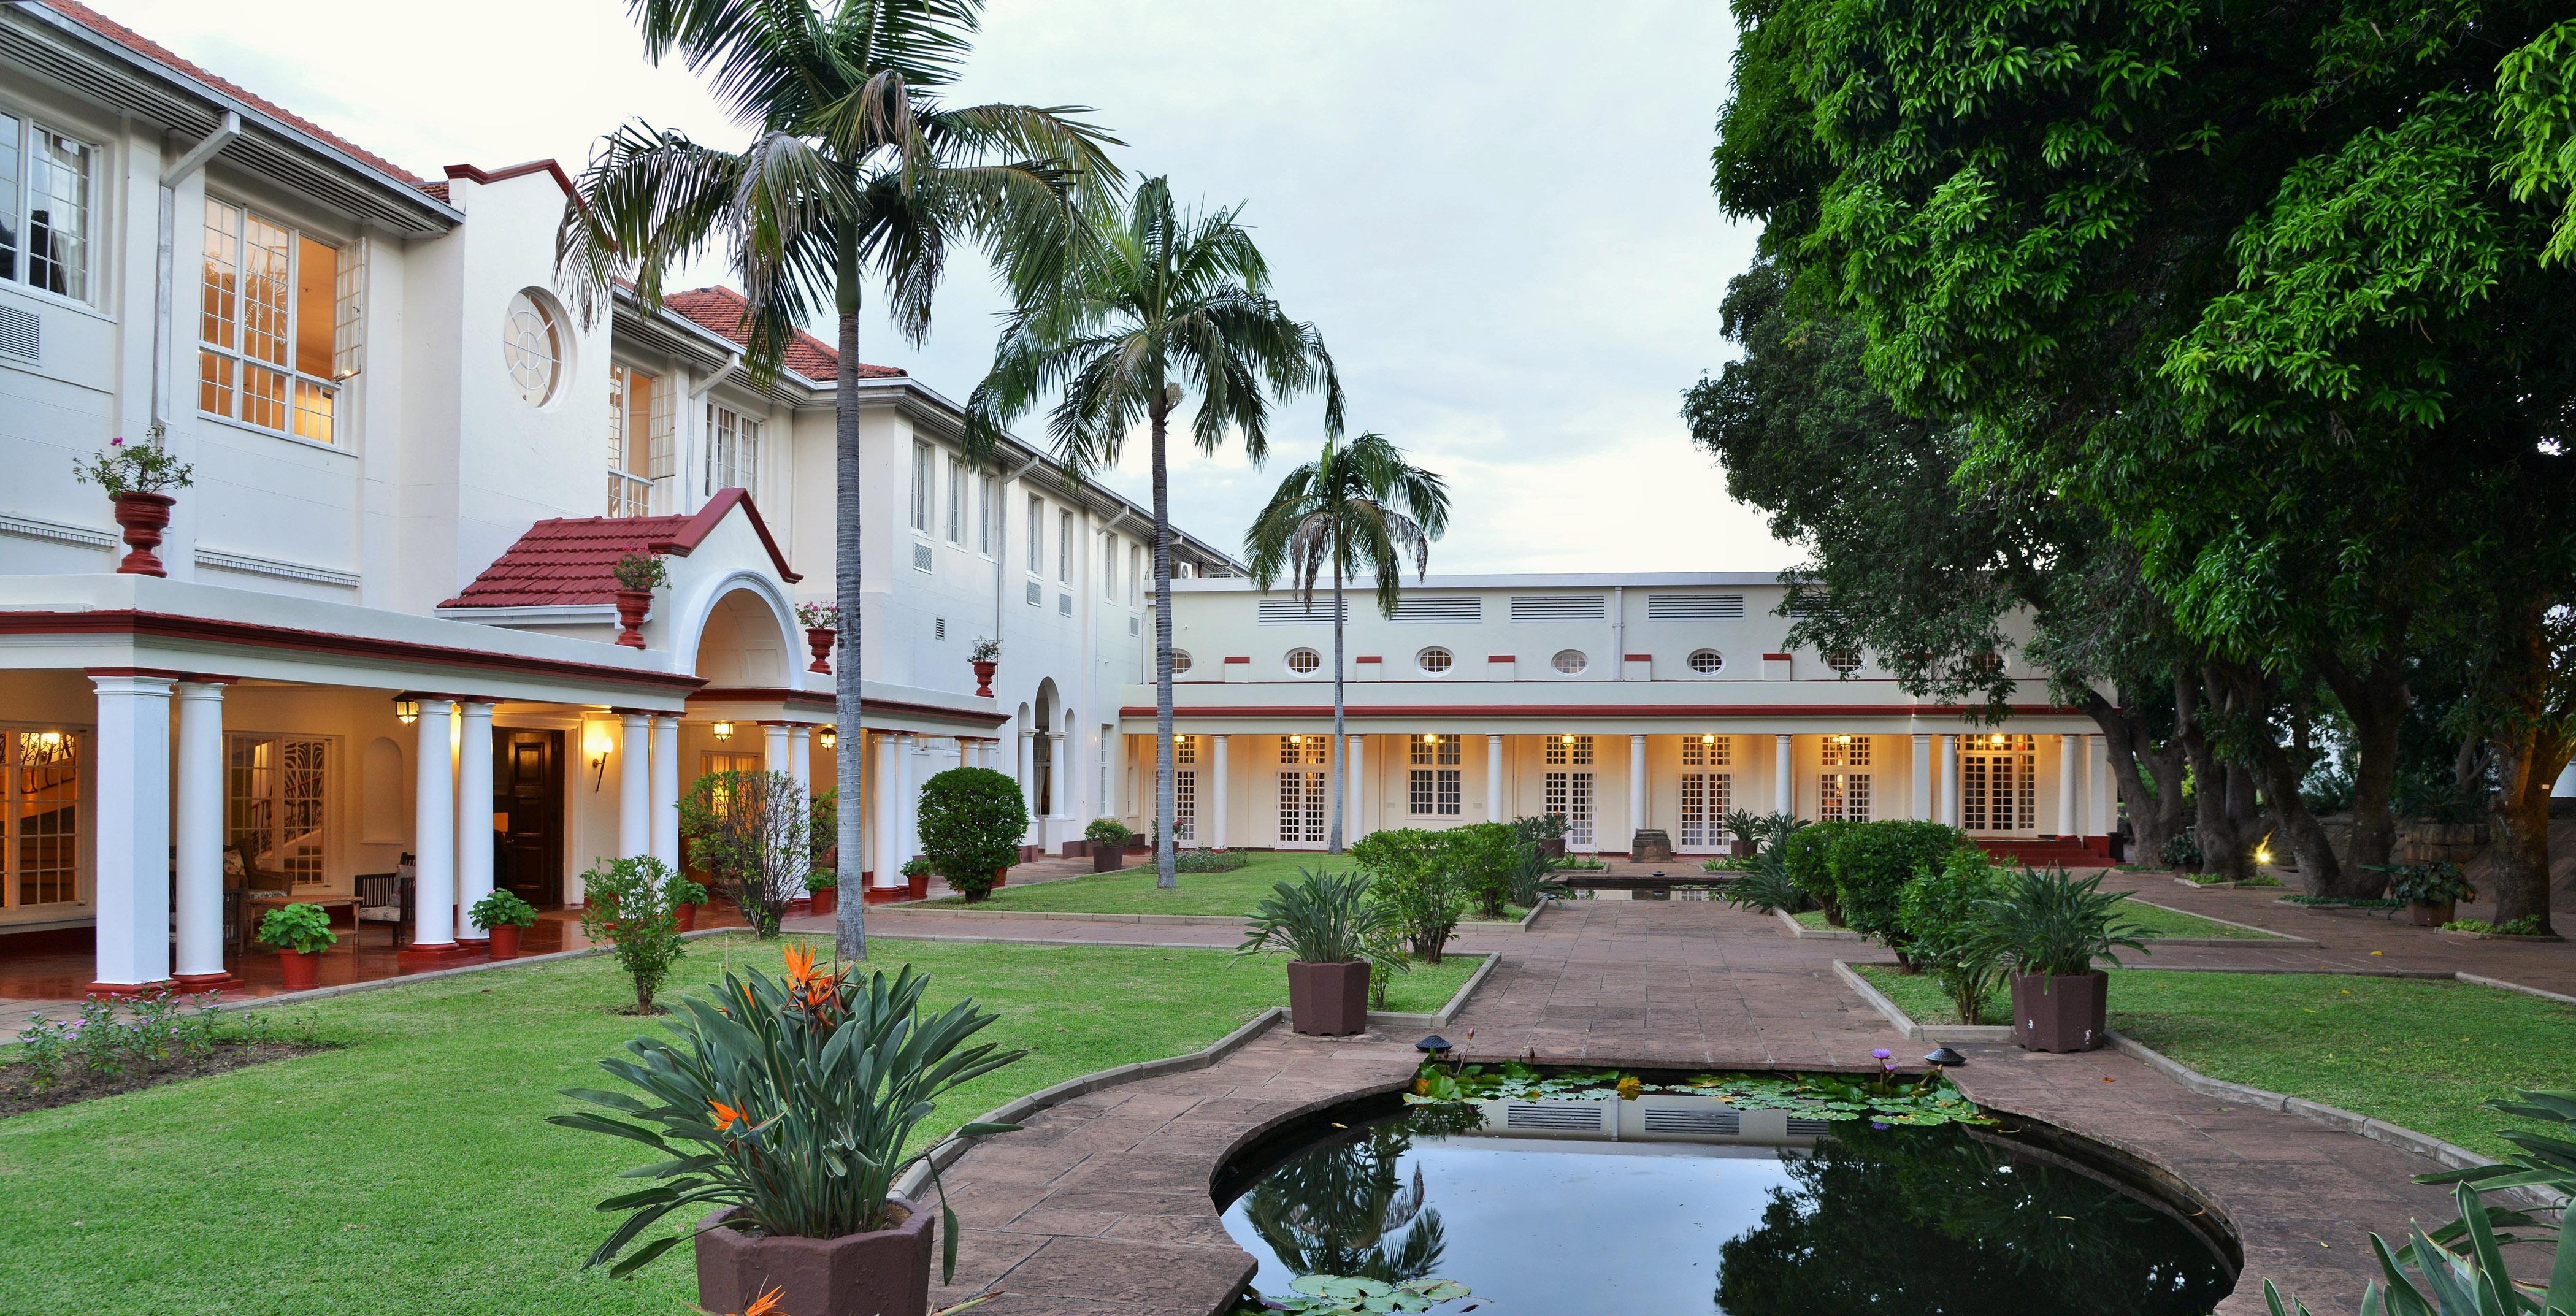 The Victoria Falls Hotel Экстерьер фото